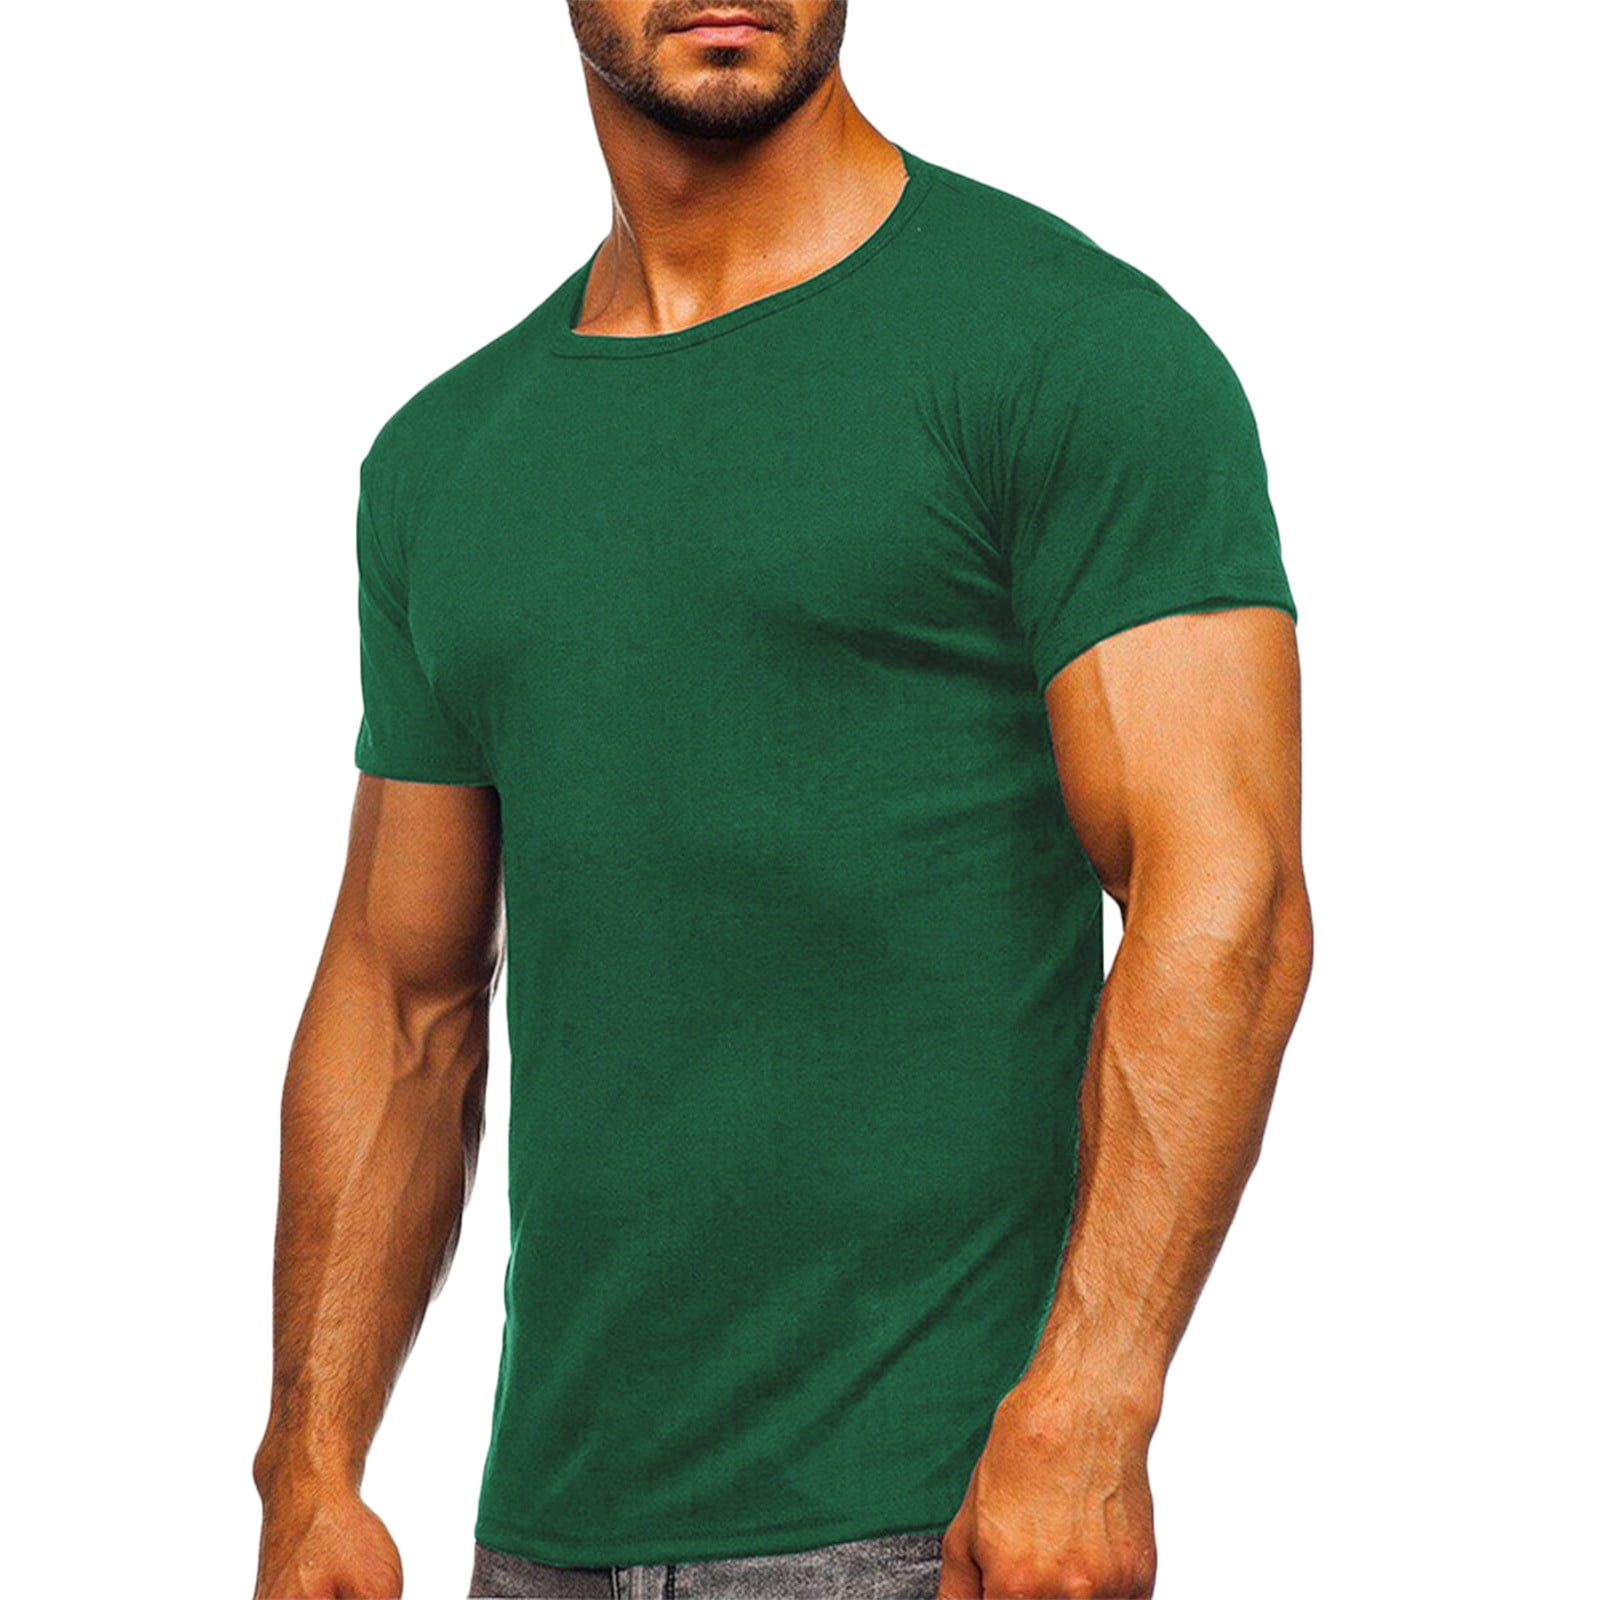 JWZUY Mens T Shirt Short Sleeve Crew Neck Soft Tees Classic Fit